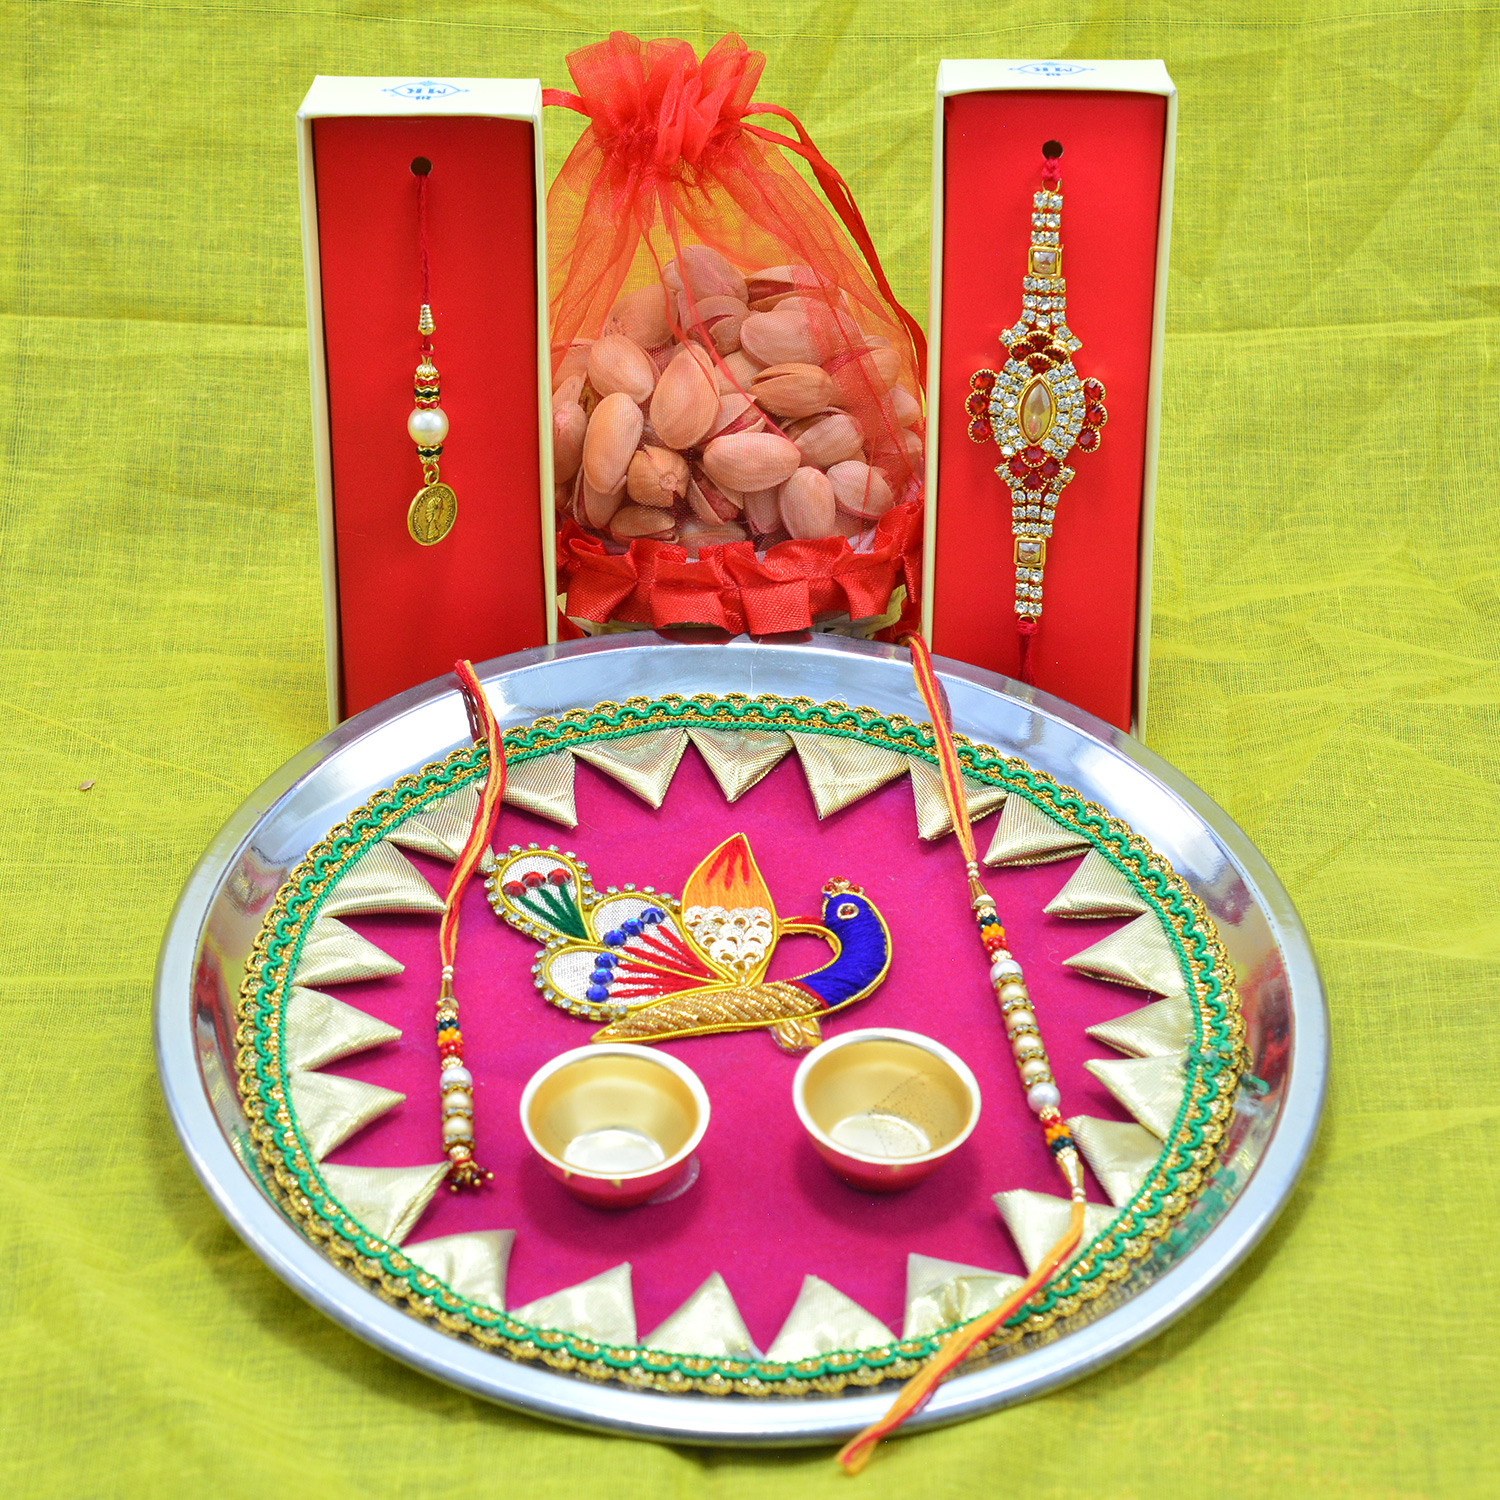 2 Bhaiya Bhabhi Rakhis with Pista Dry Fruits and Peacock Designer Awesome Looking Rakhi Puja Thali